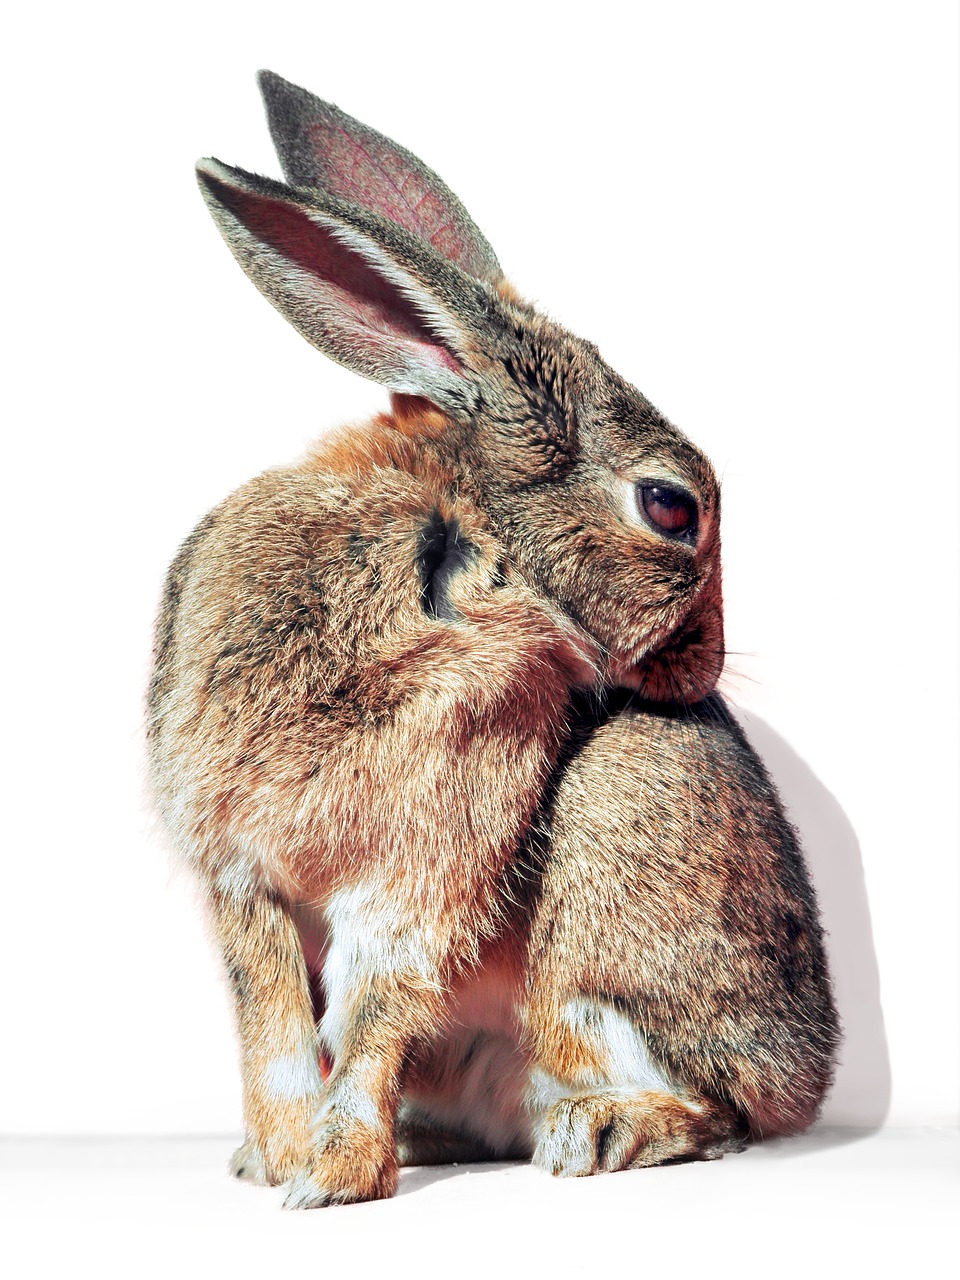 Image - rabbit hare cure pet wildlife